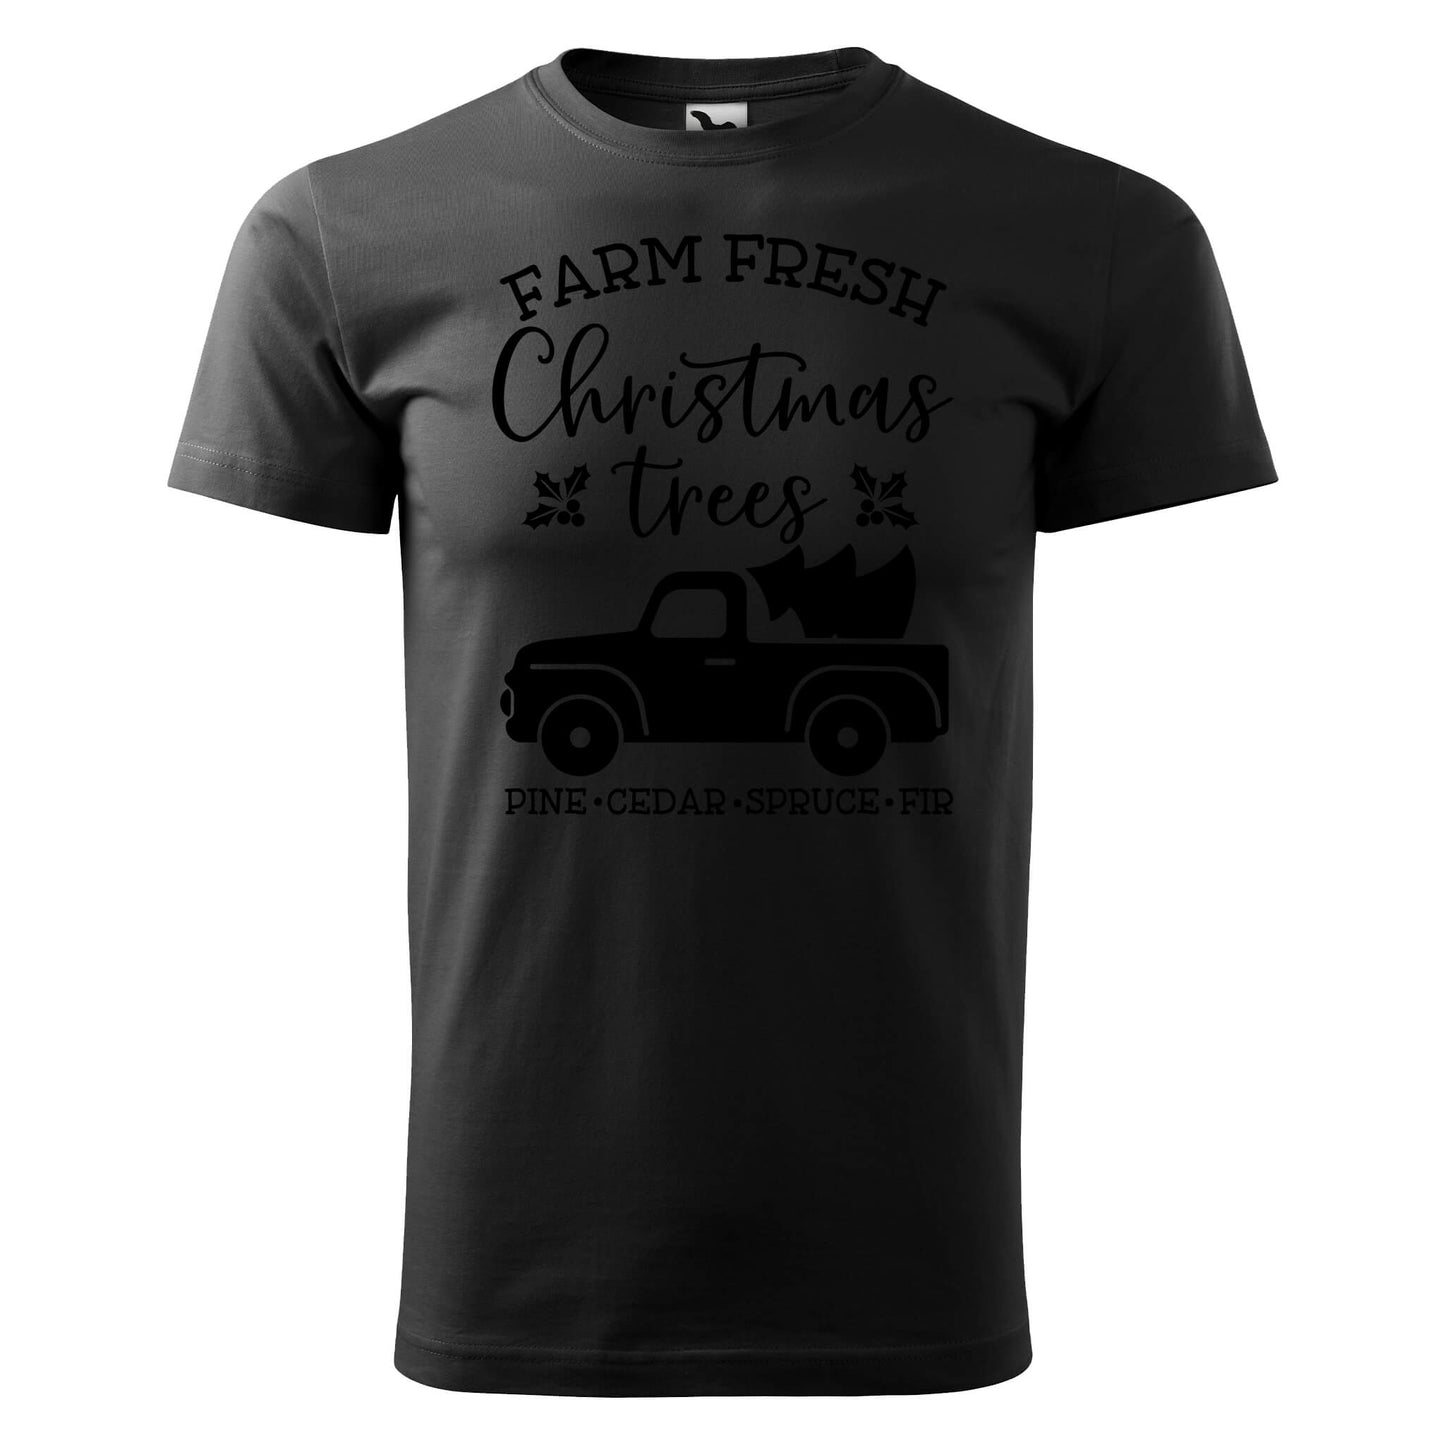 Farm fresh christmas trees 2 t-shirt - rvdesignprint